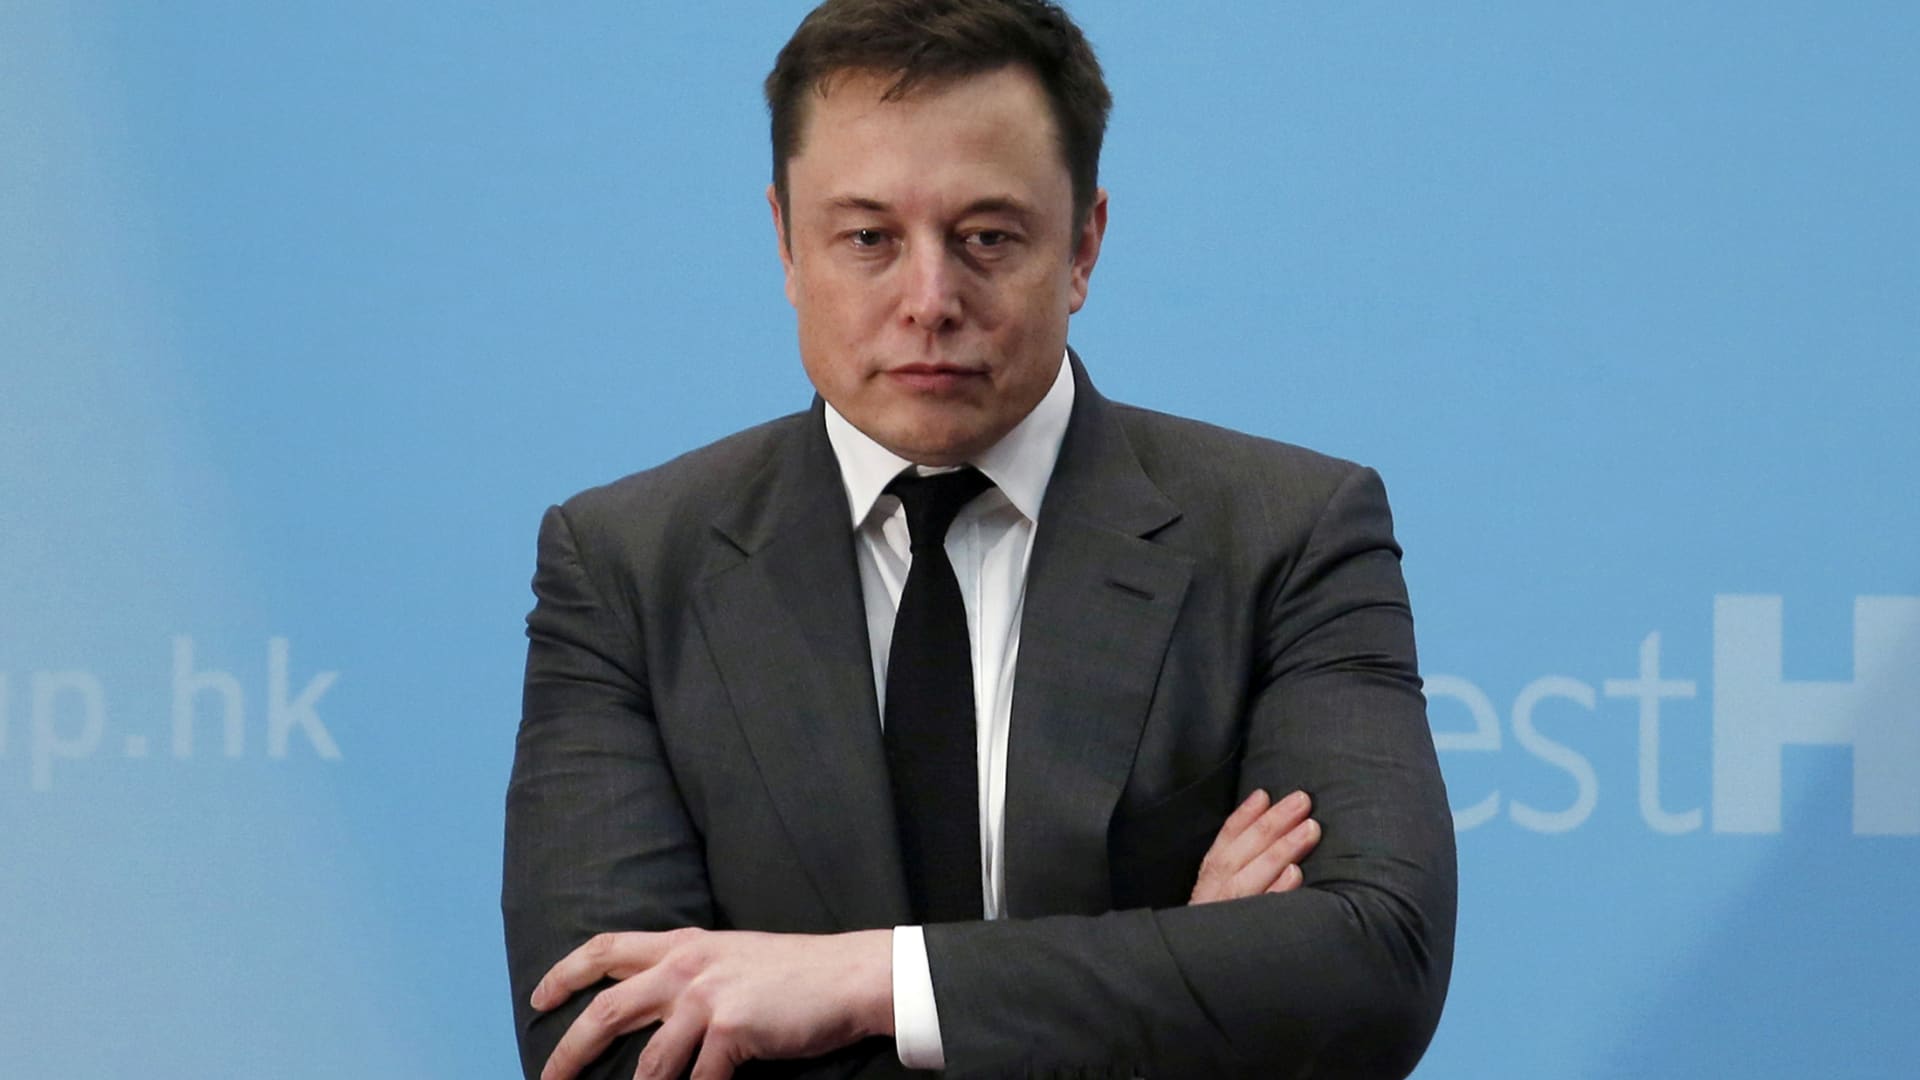 Elon Musk has more than 20 direct reports at Tesla â here are the ones we know about